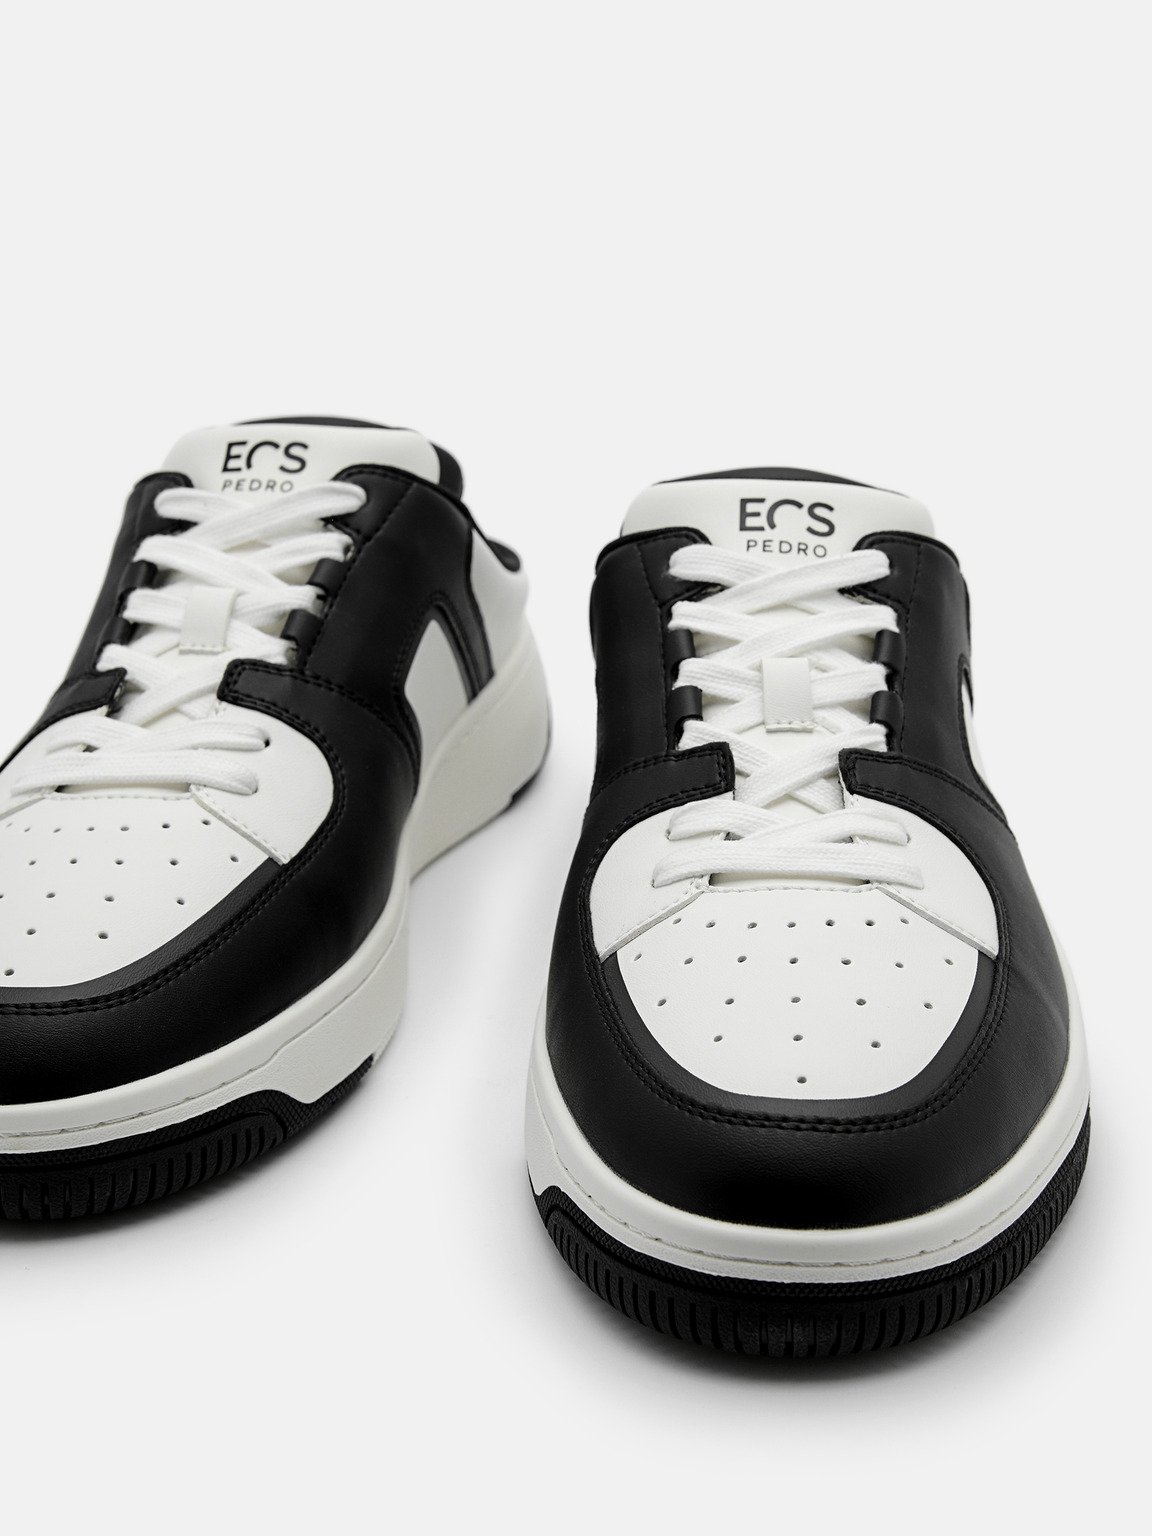 Men's EOS Slip-On Sneakers, Black